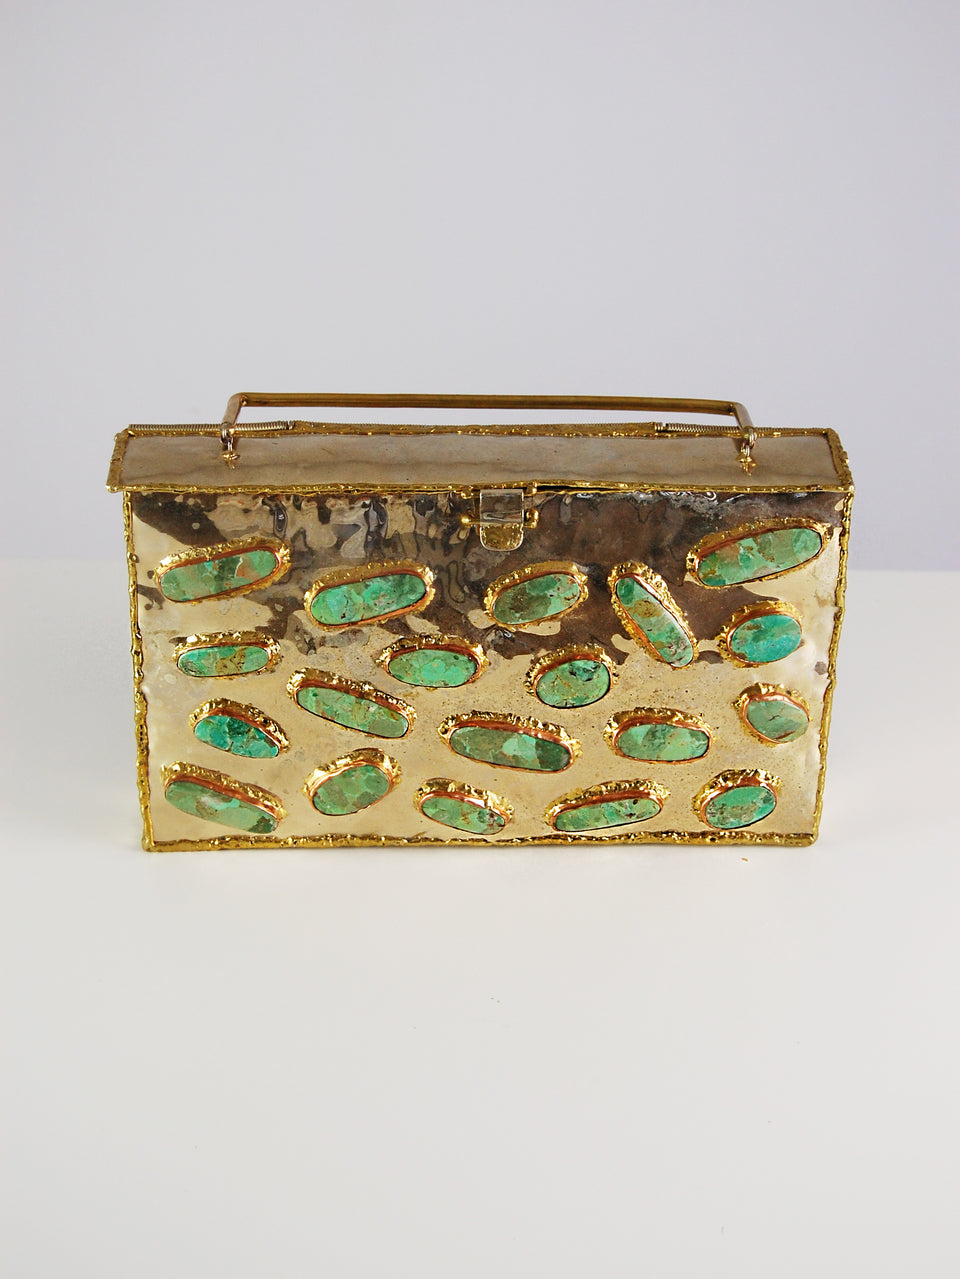 RARE: Handmade Mexican gold box bag